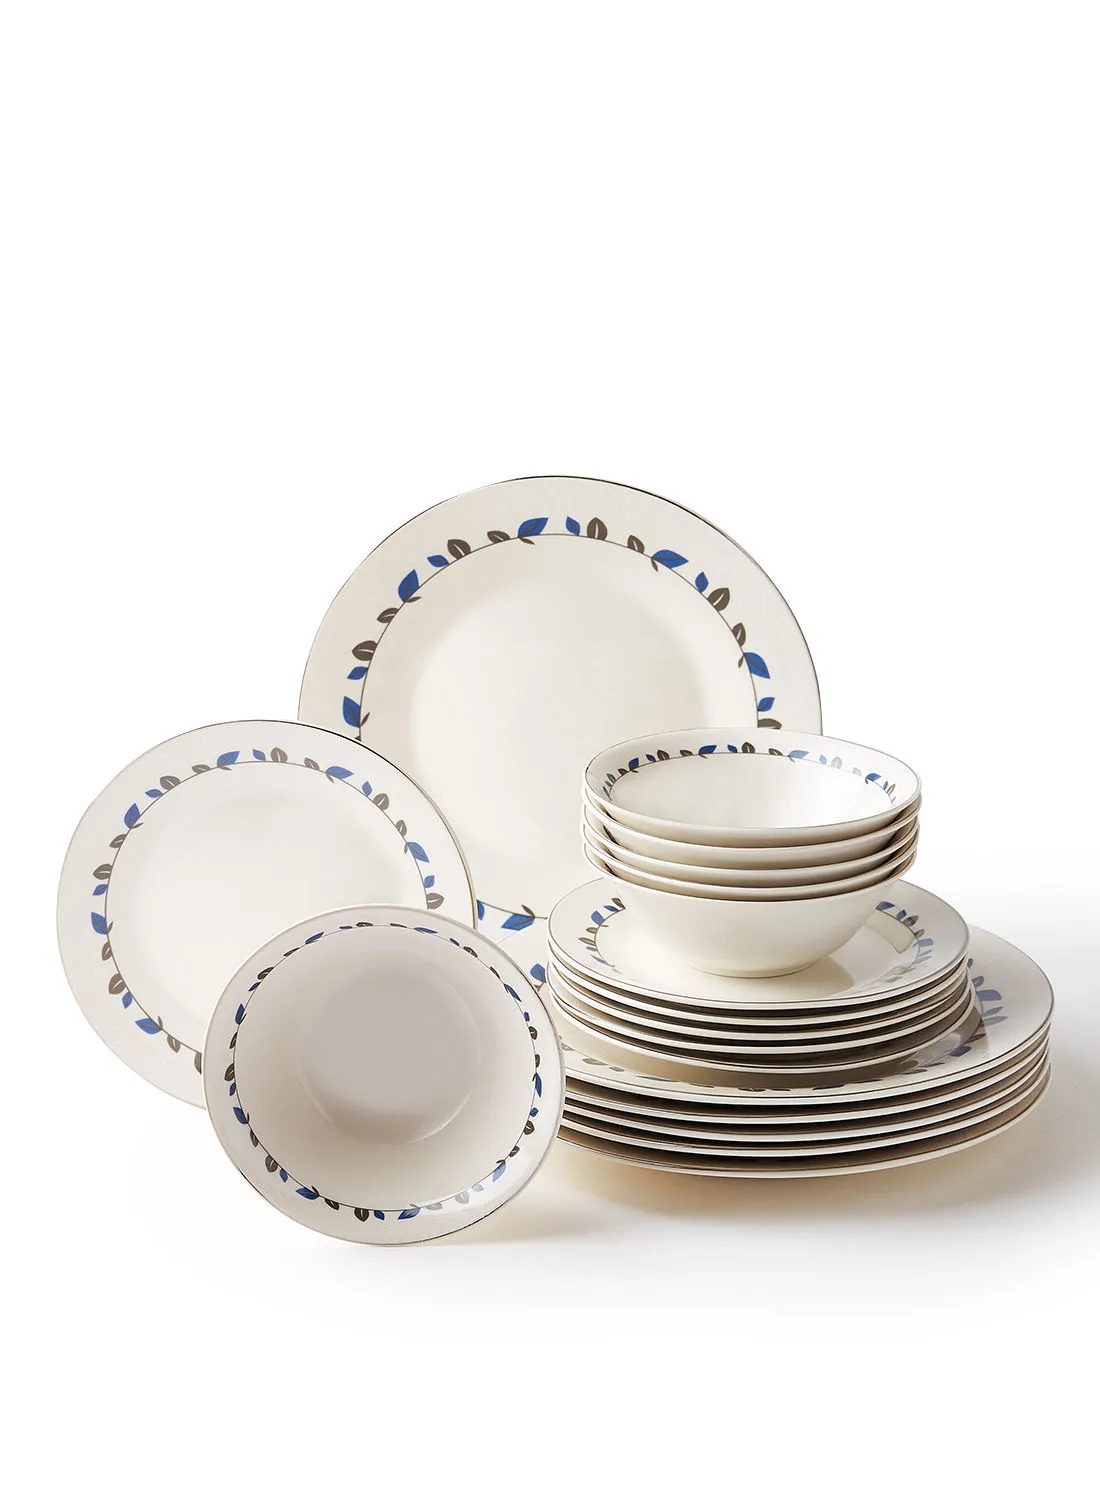 noon east 18 Piece Porcelain Dinner Set - Dishes, Plates - Dinner Plate, Side Plate, Bowl - Serves 6 - Printed Design Lyra